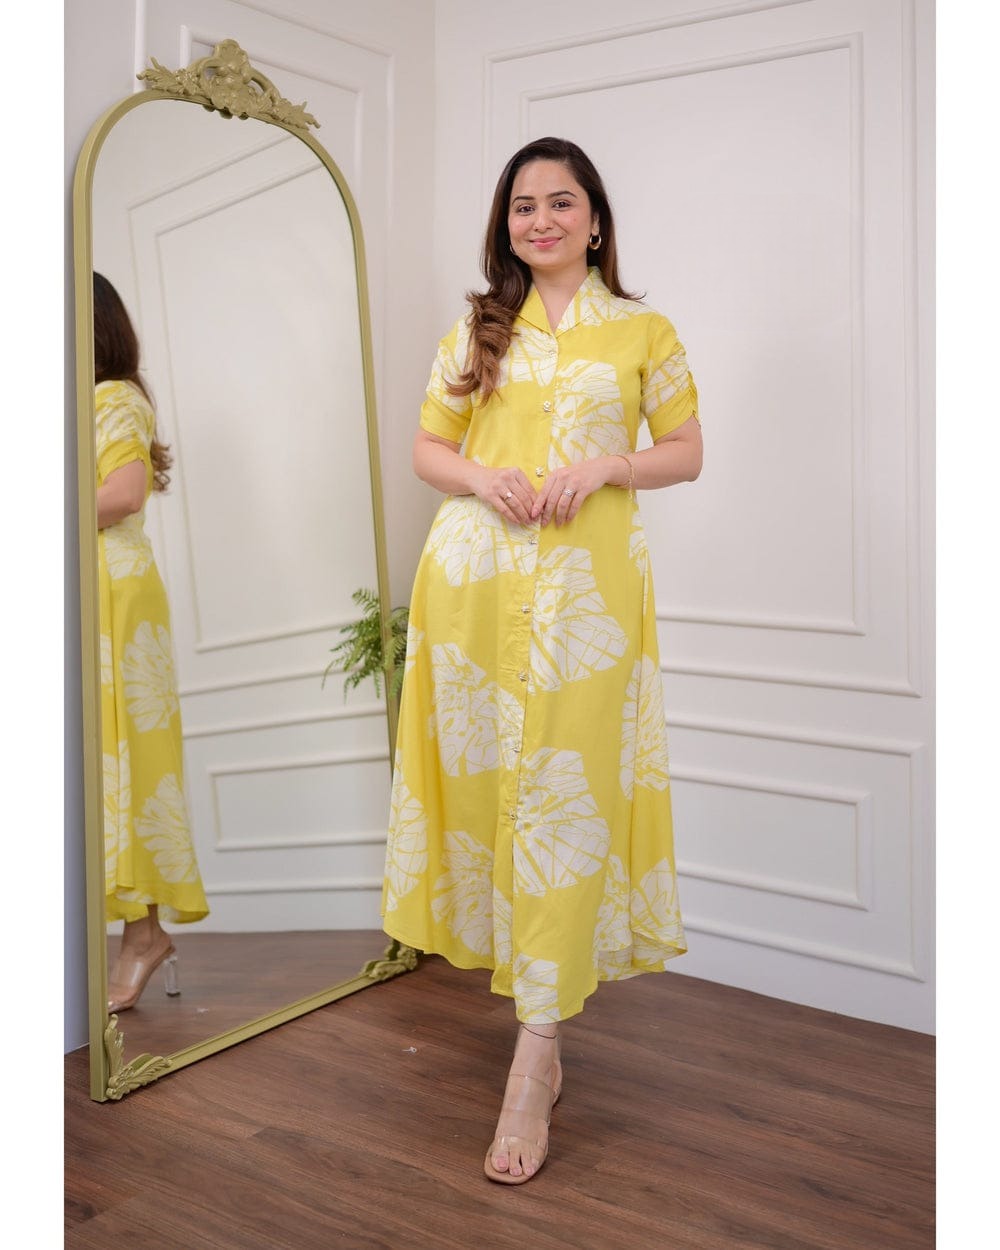 Premium floral yellow cotton gown